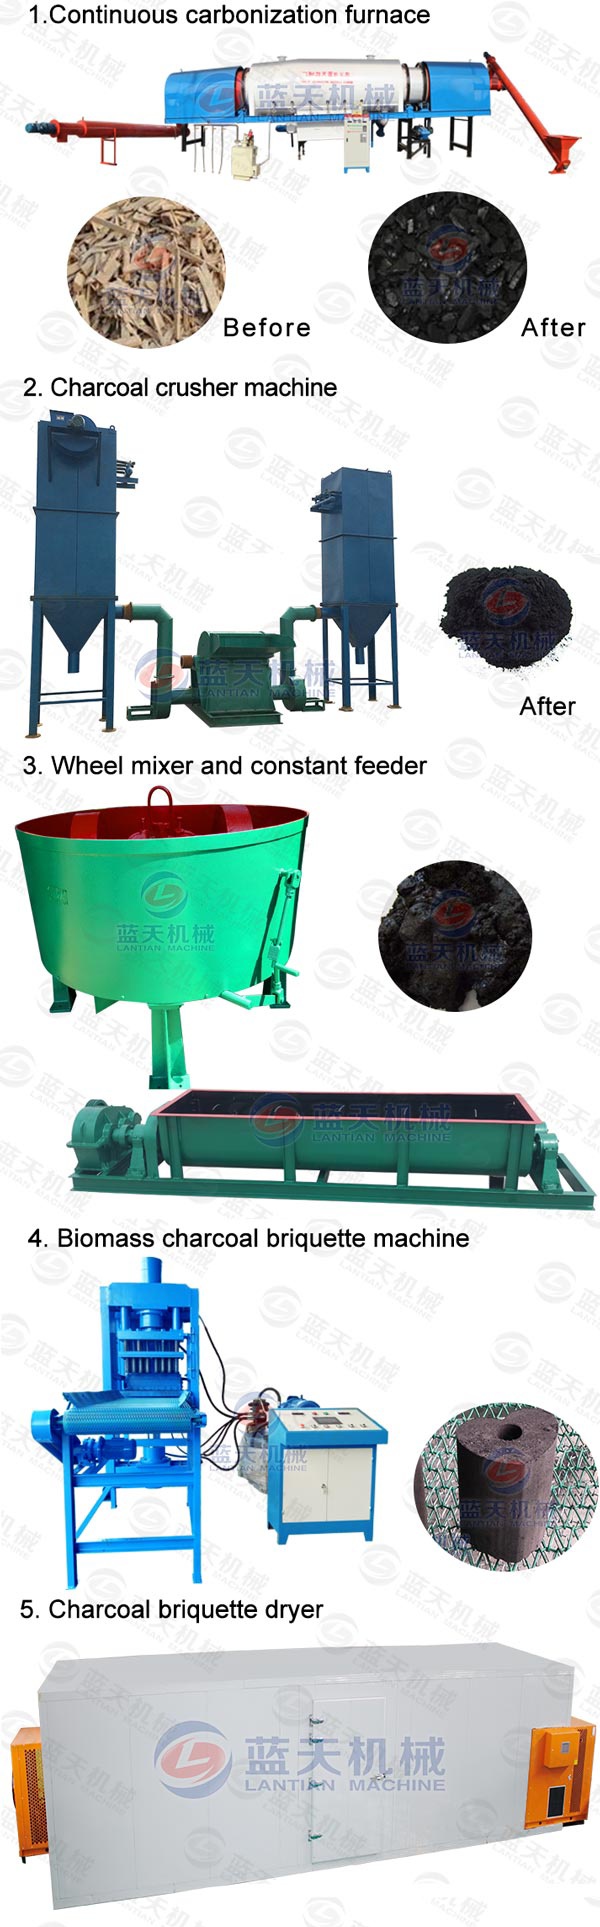 Product Line of Biomass Charcoal Briquette Machine